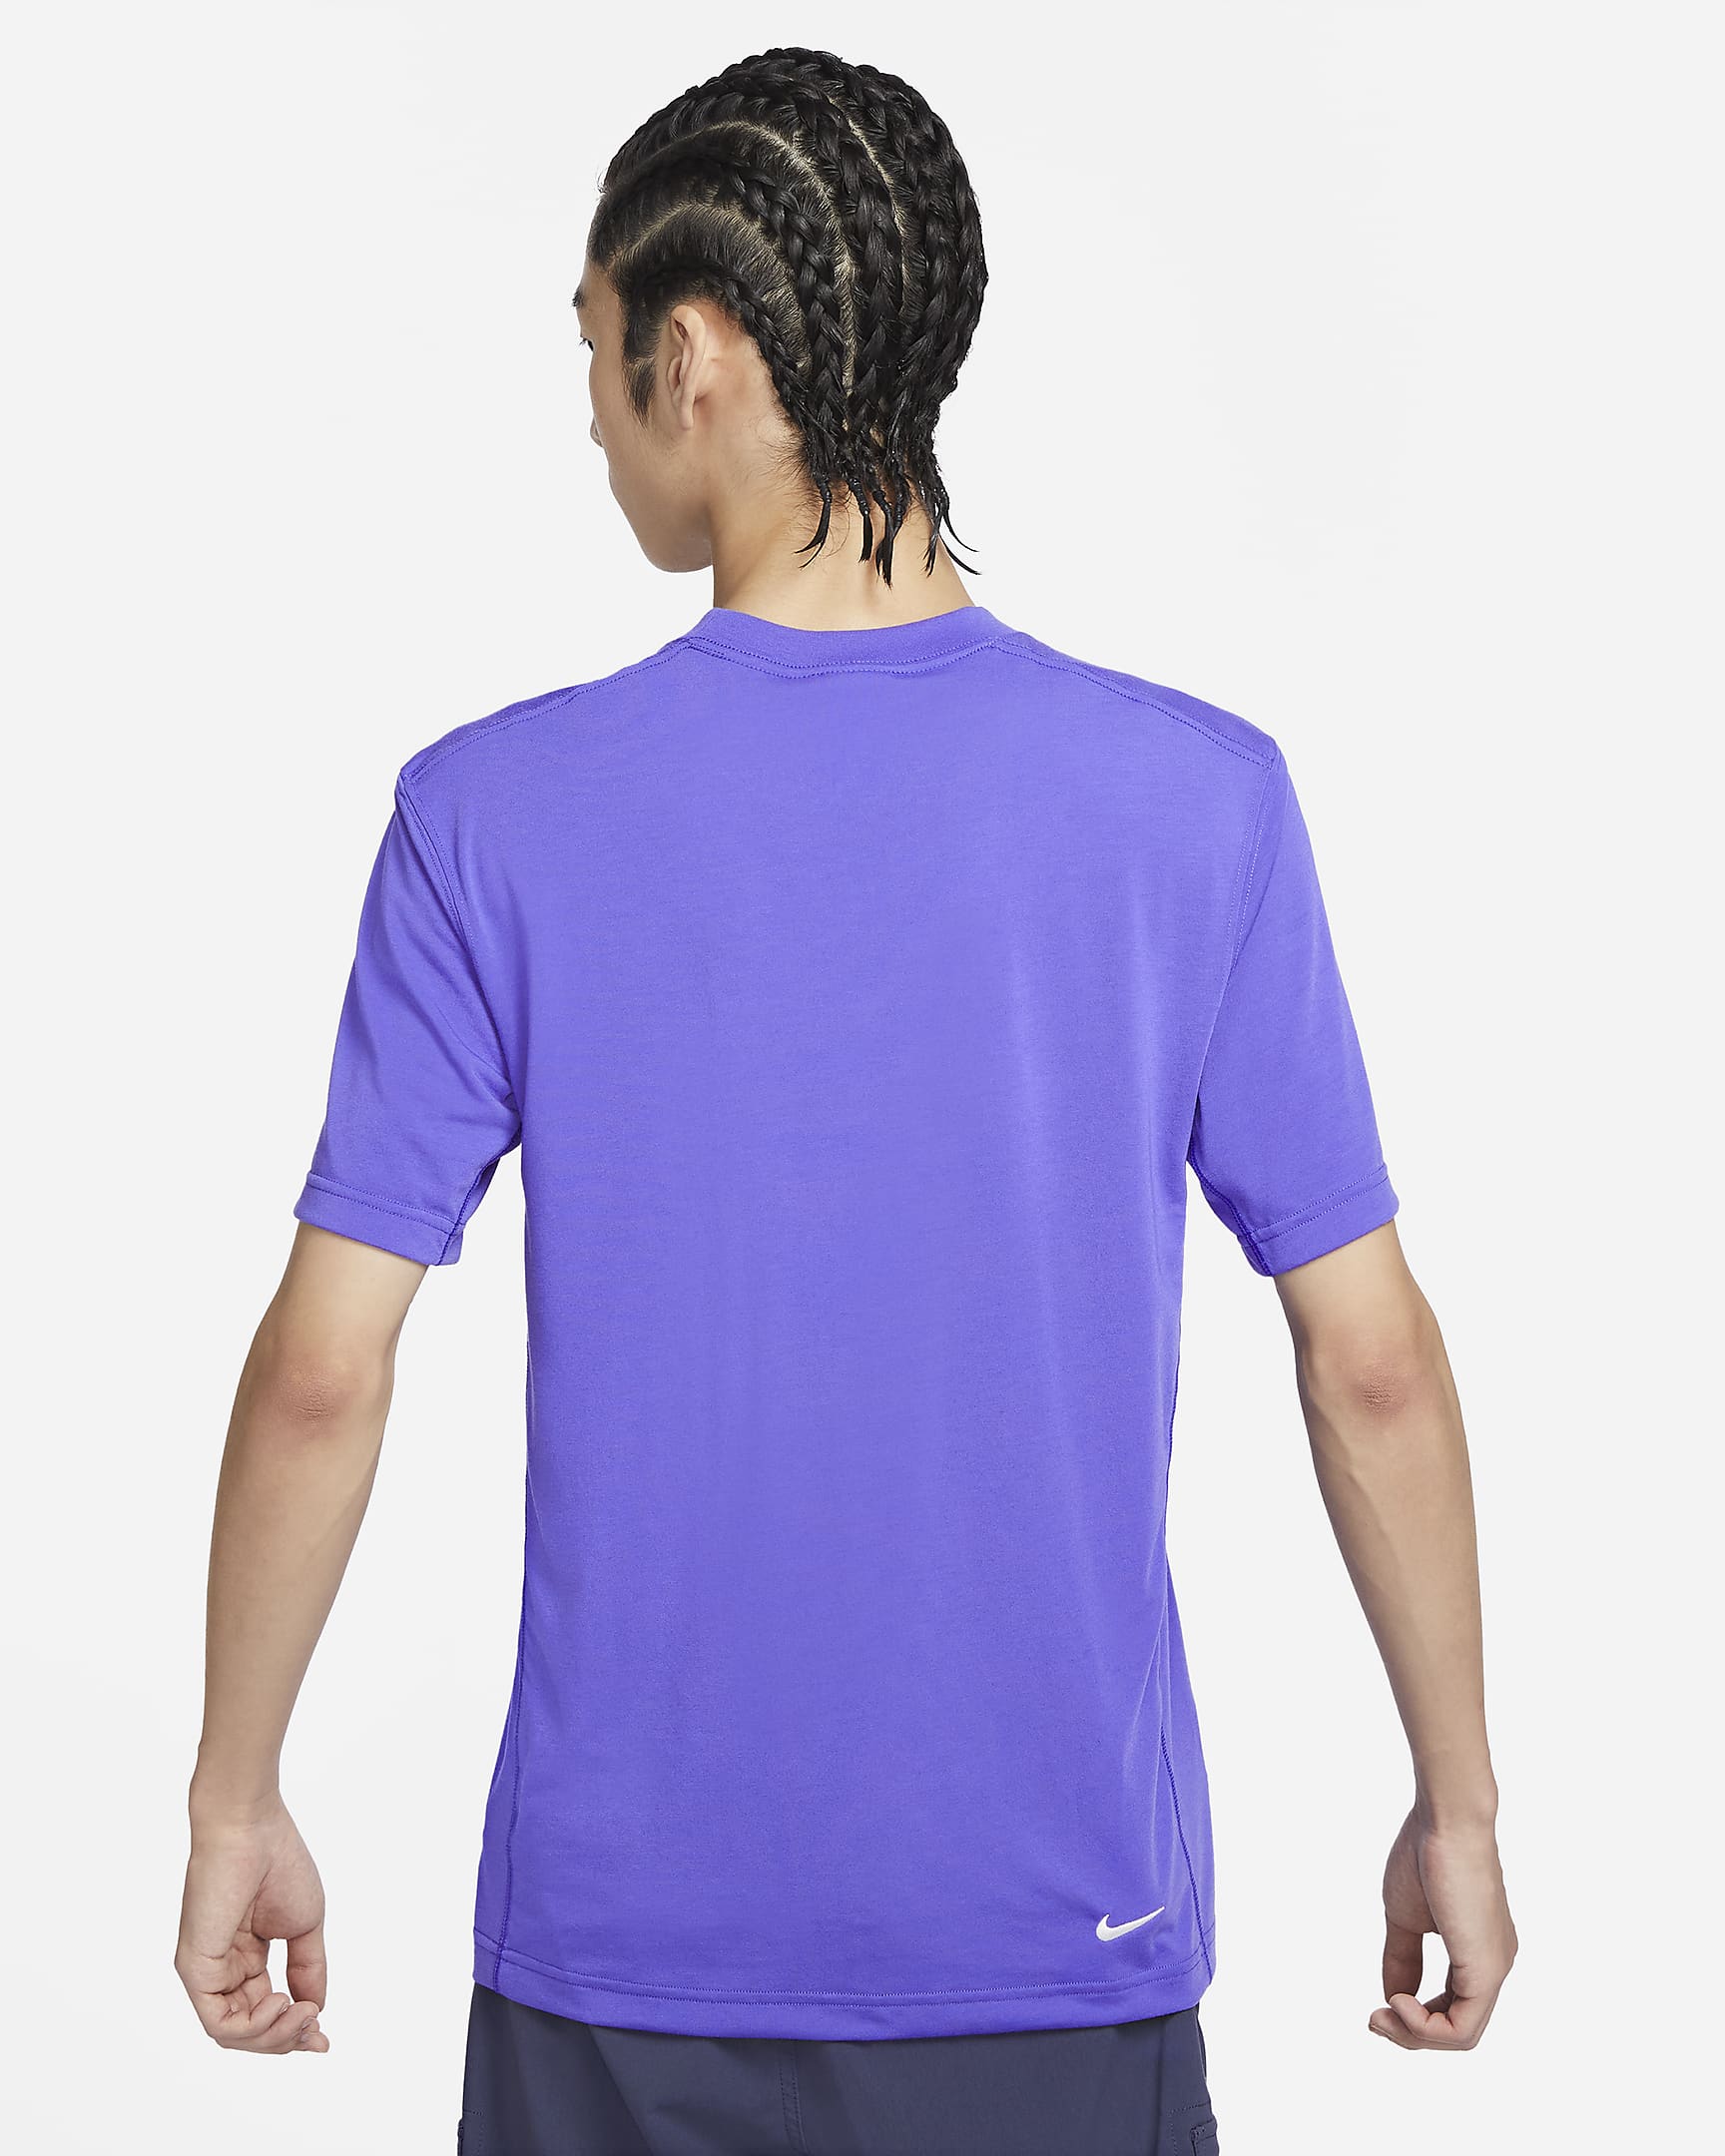 Nike ACG 'Goat Rocks' Men's Dri-FIT ADV UV Short-Sleeve Top. Nike ID